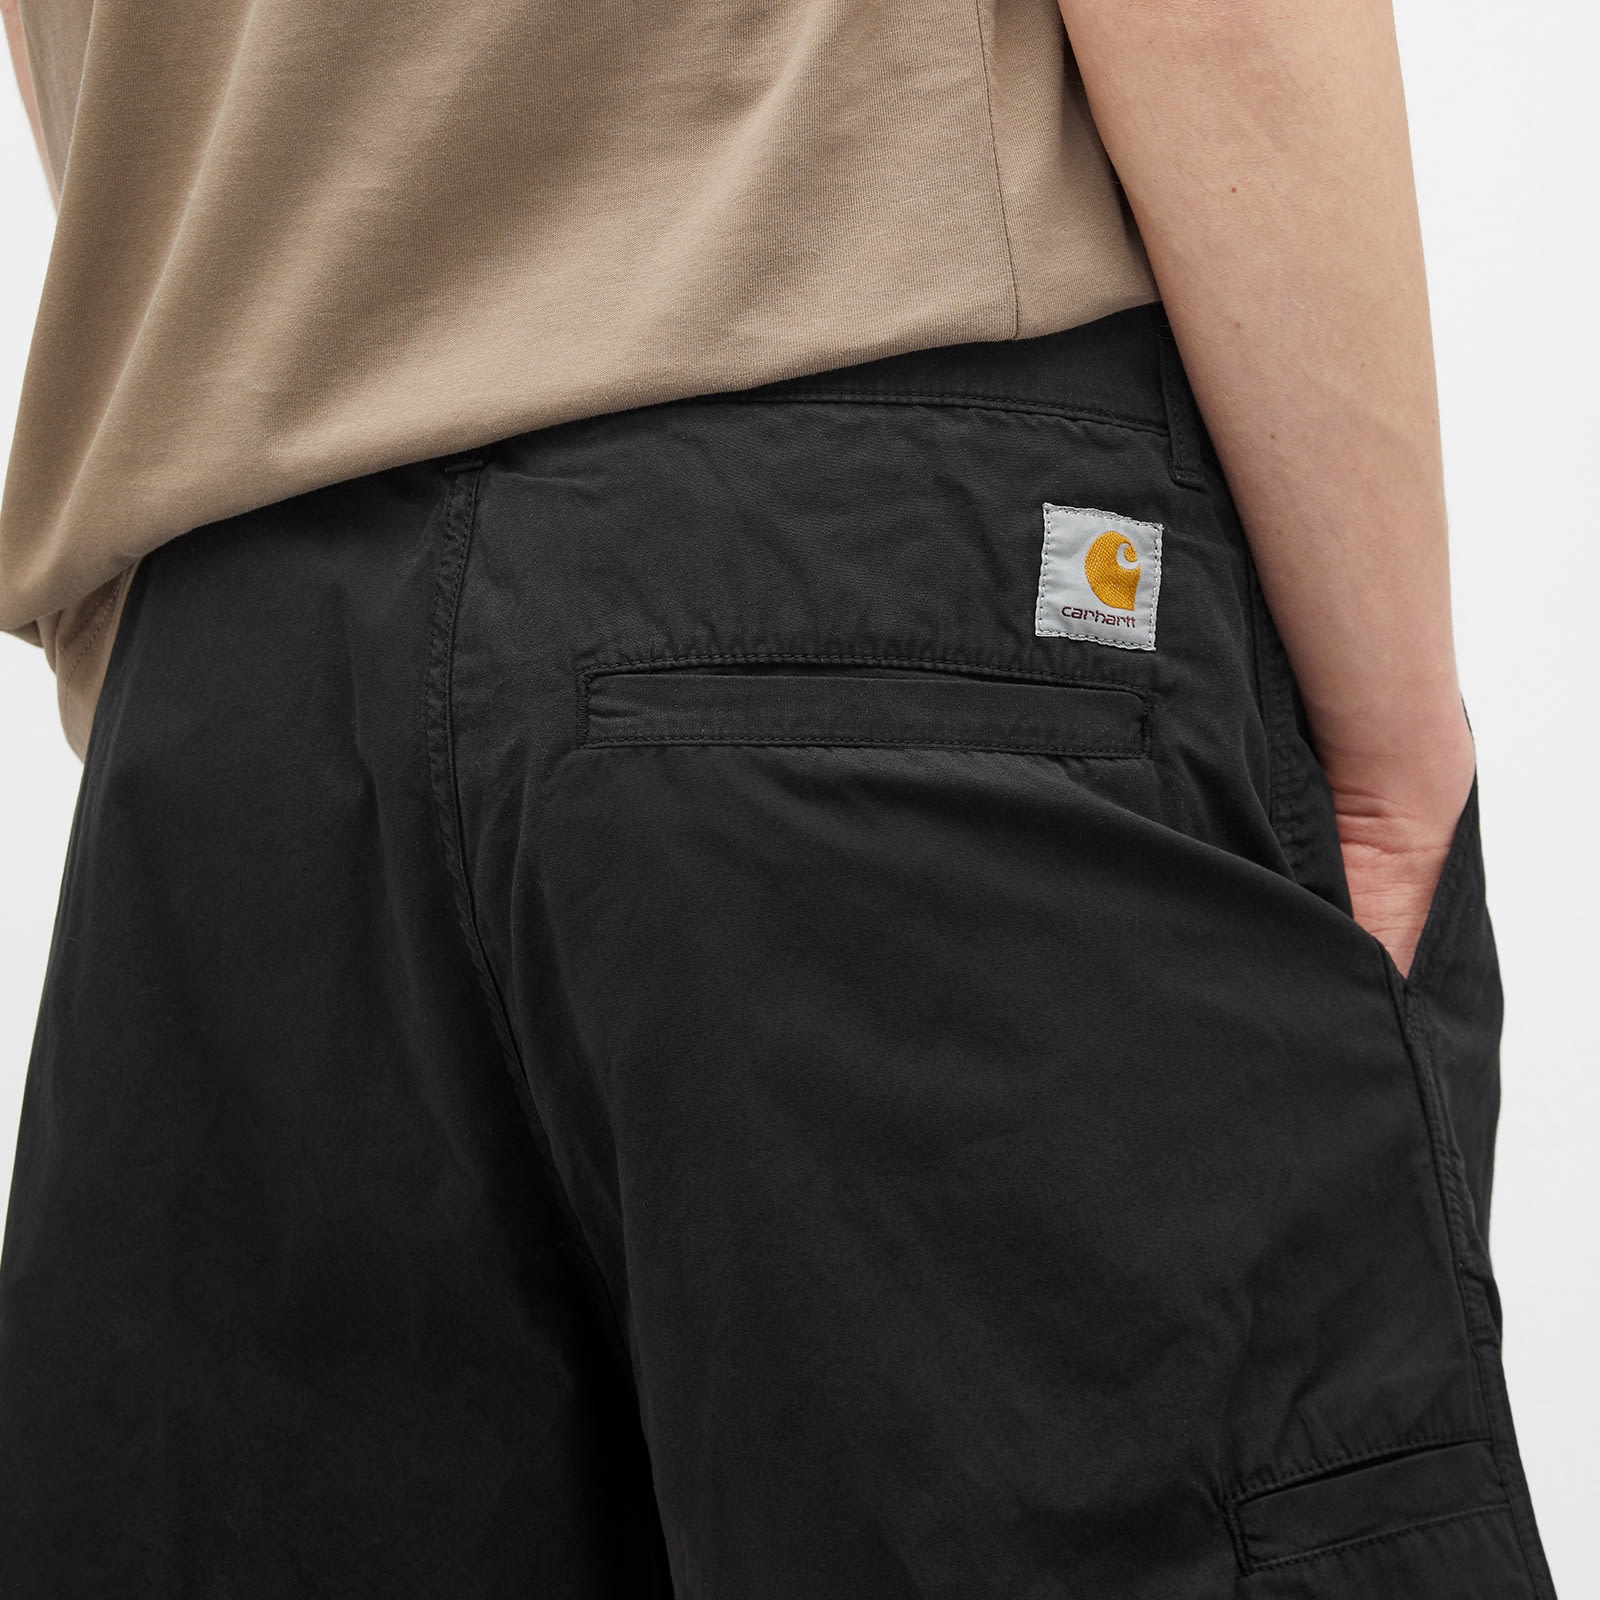 Carhartt WIP Colston Shorts - 5